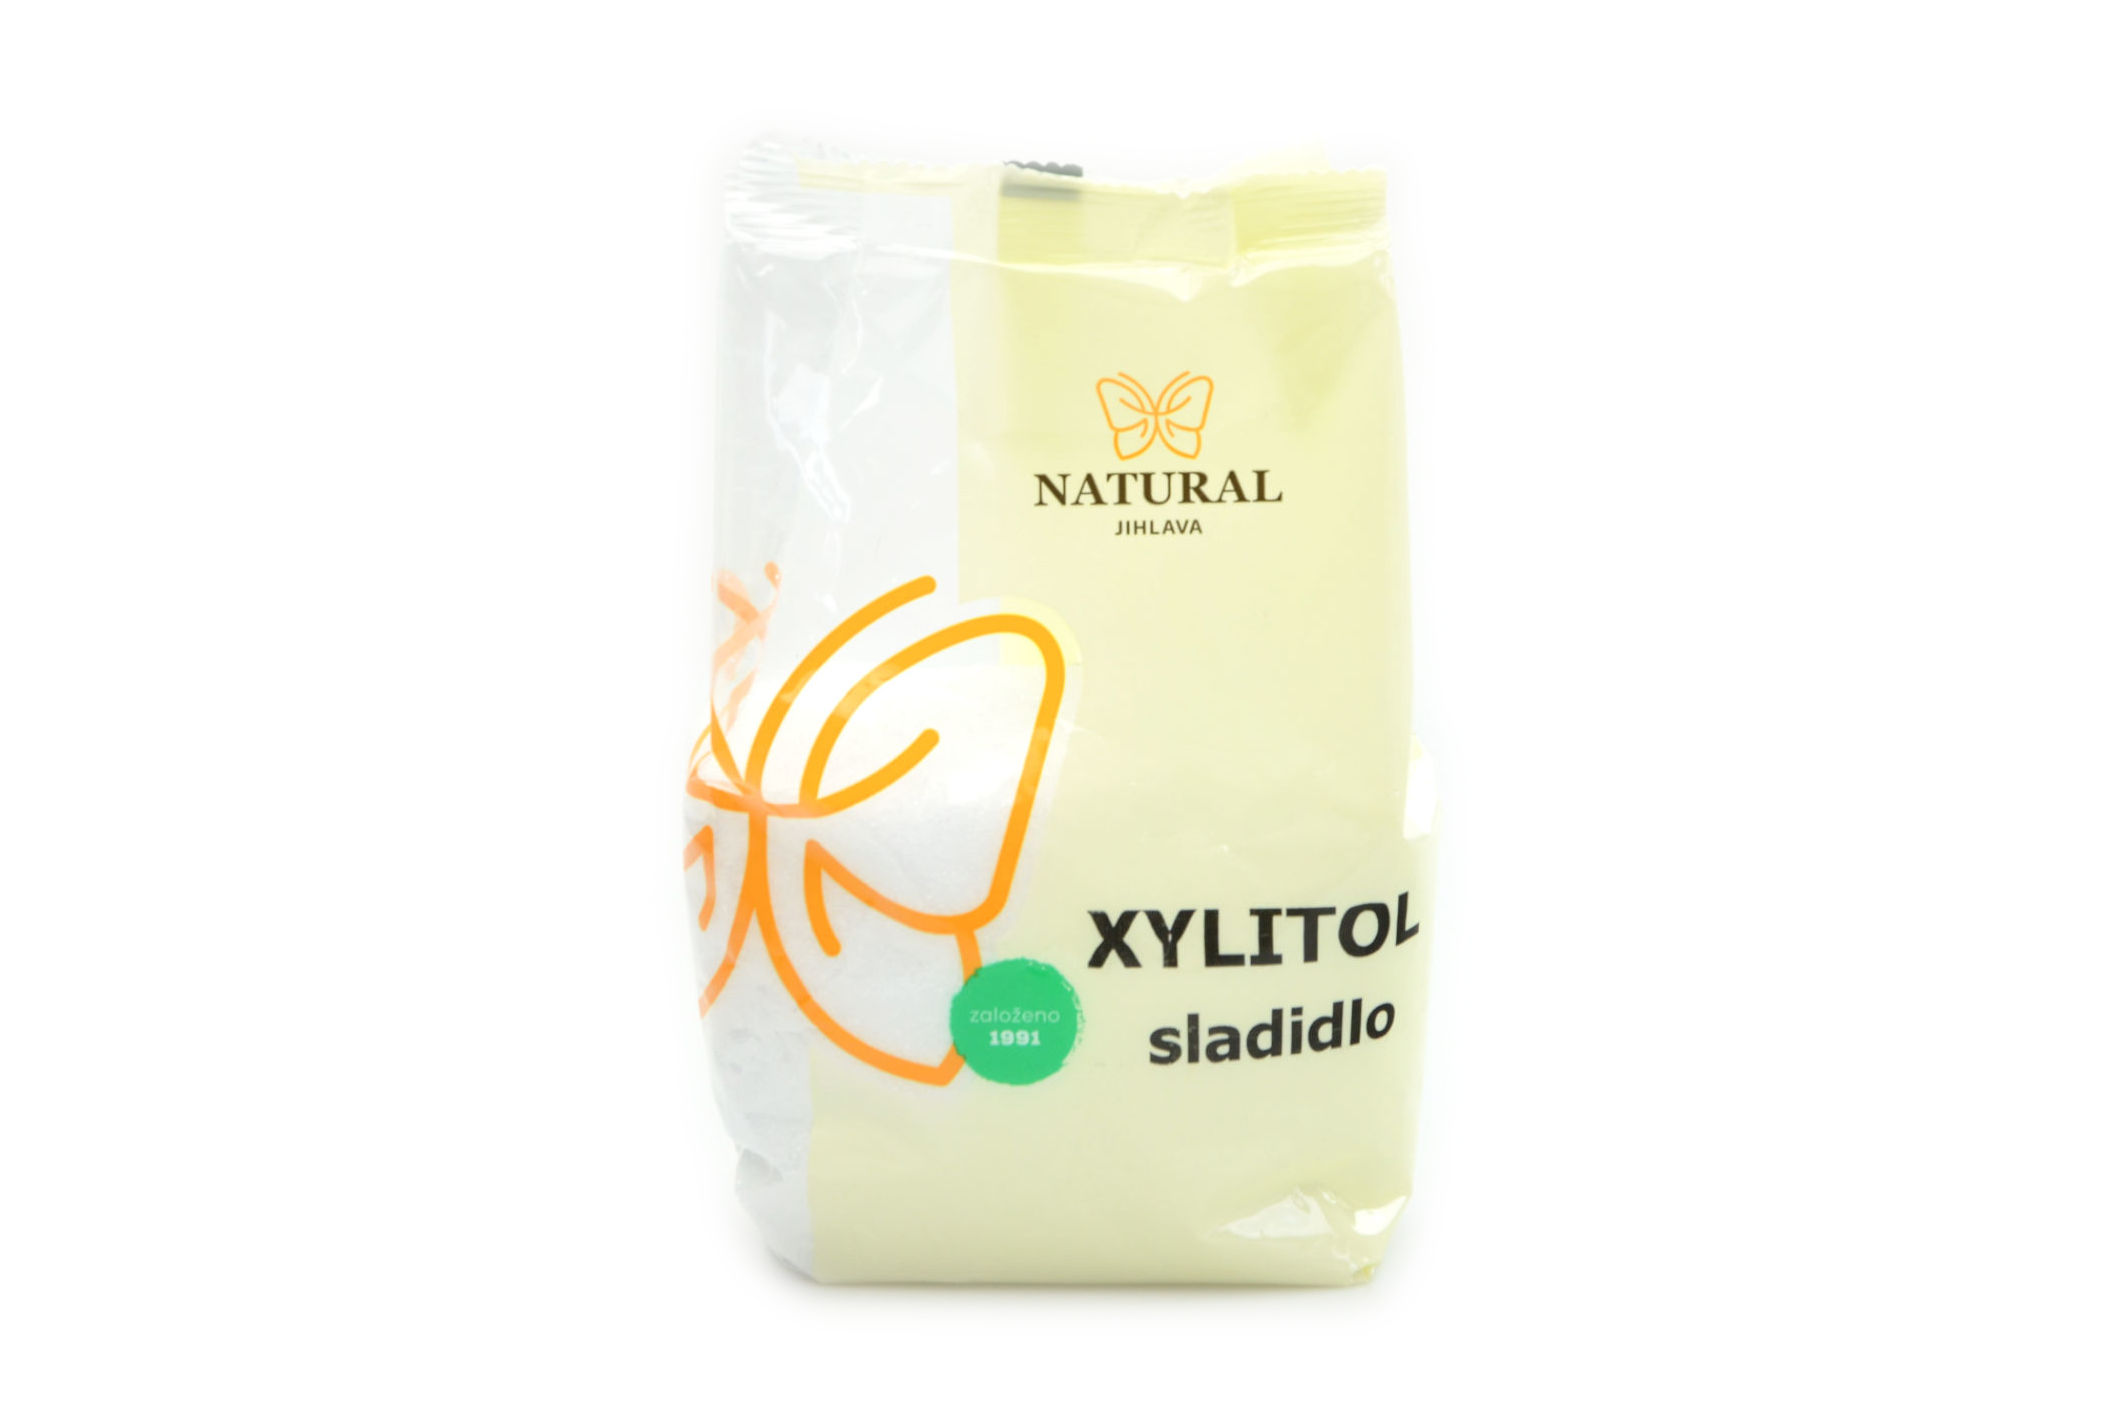 Xylitol sladidlo - Natural Jihlava